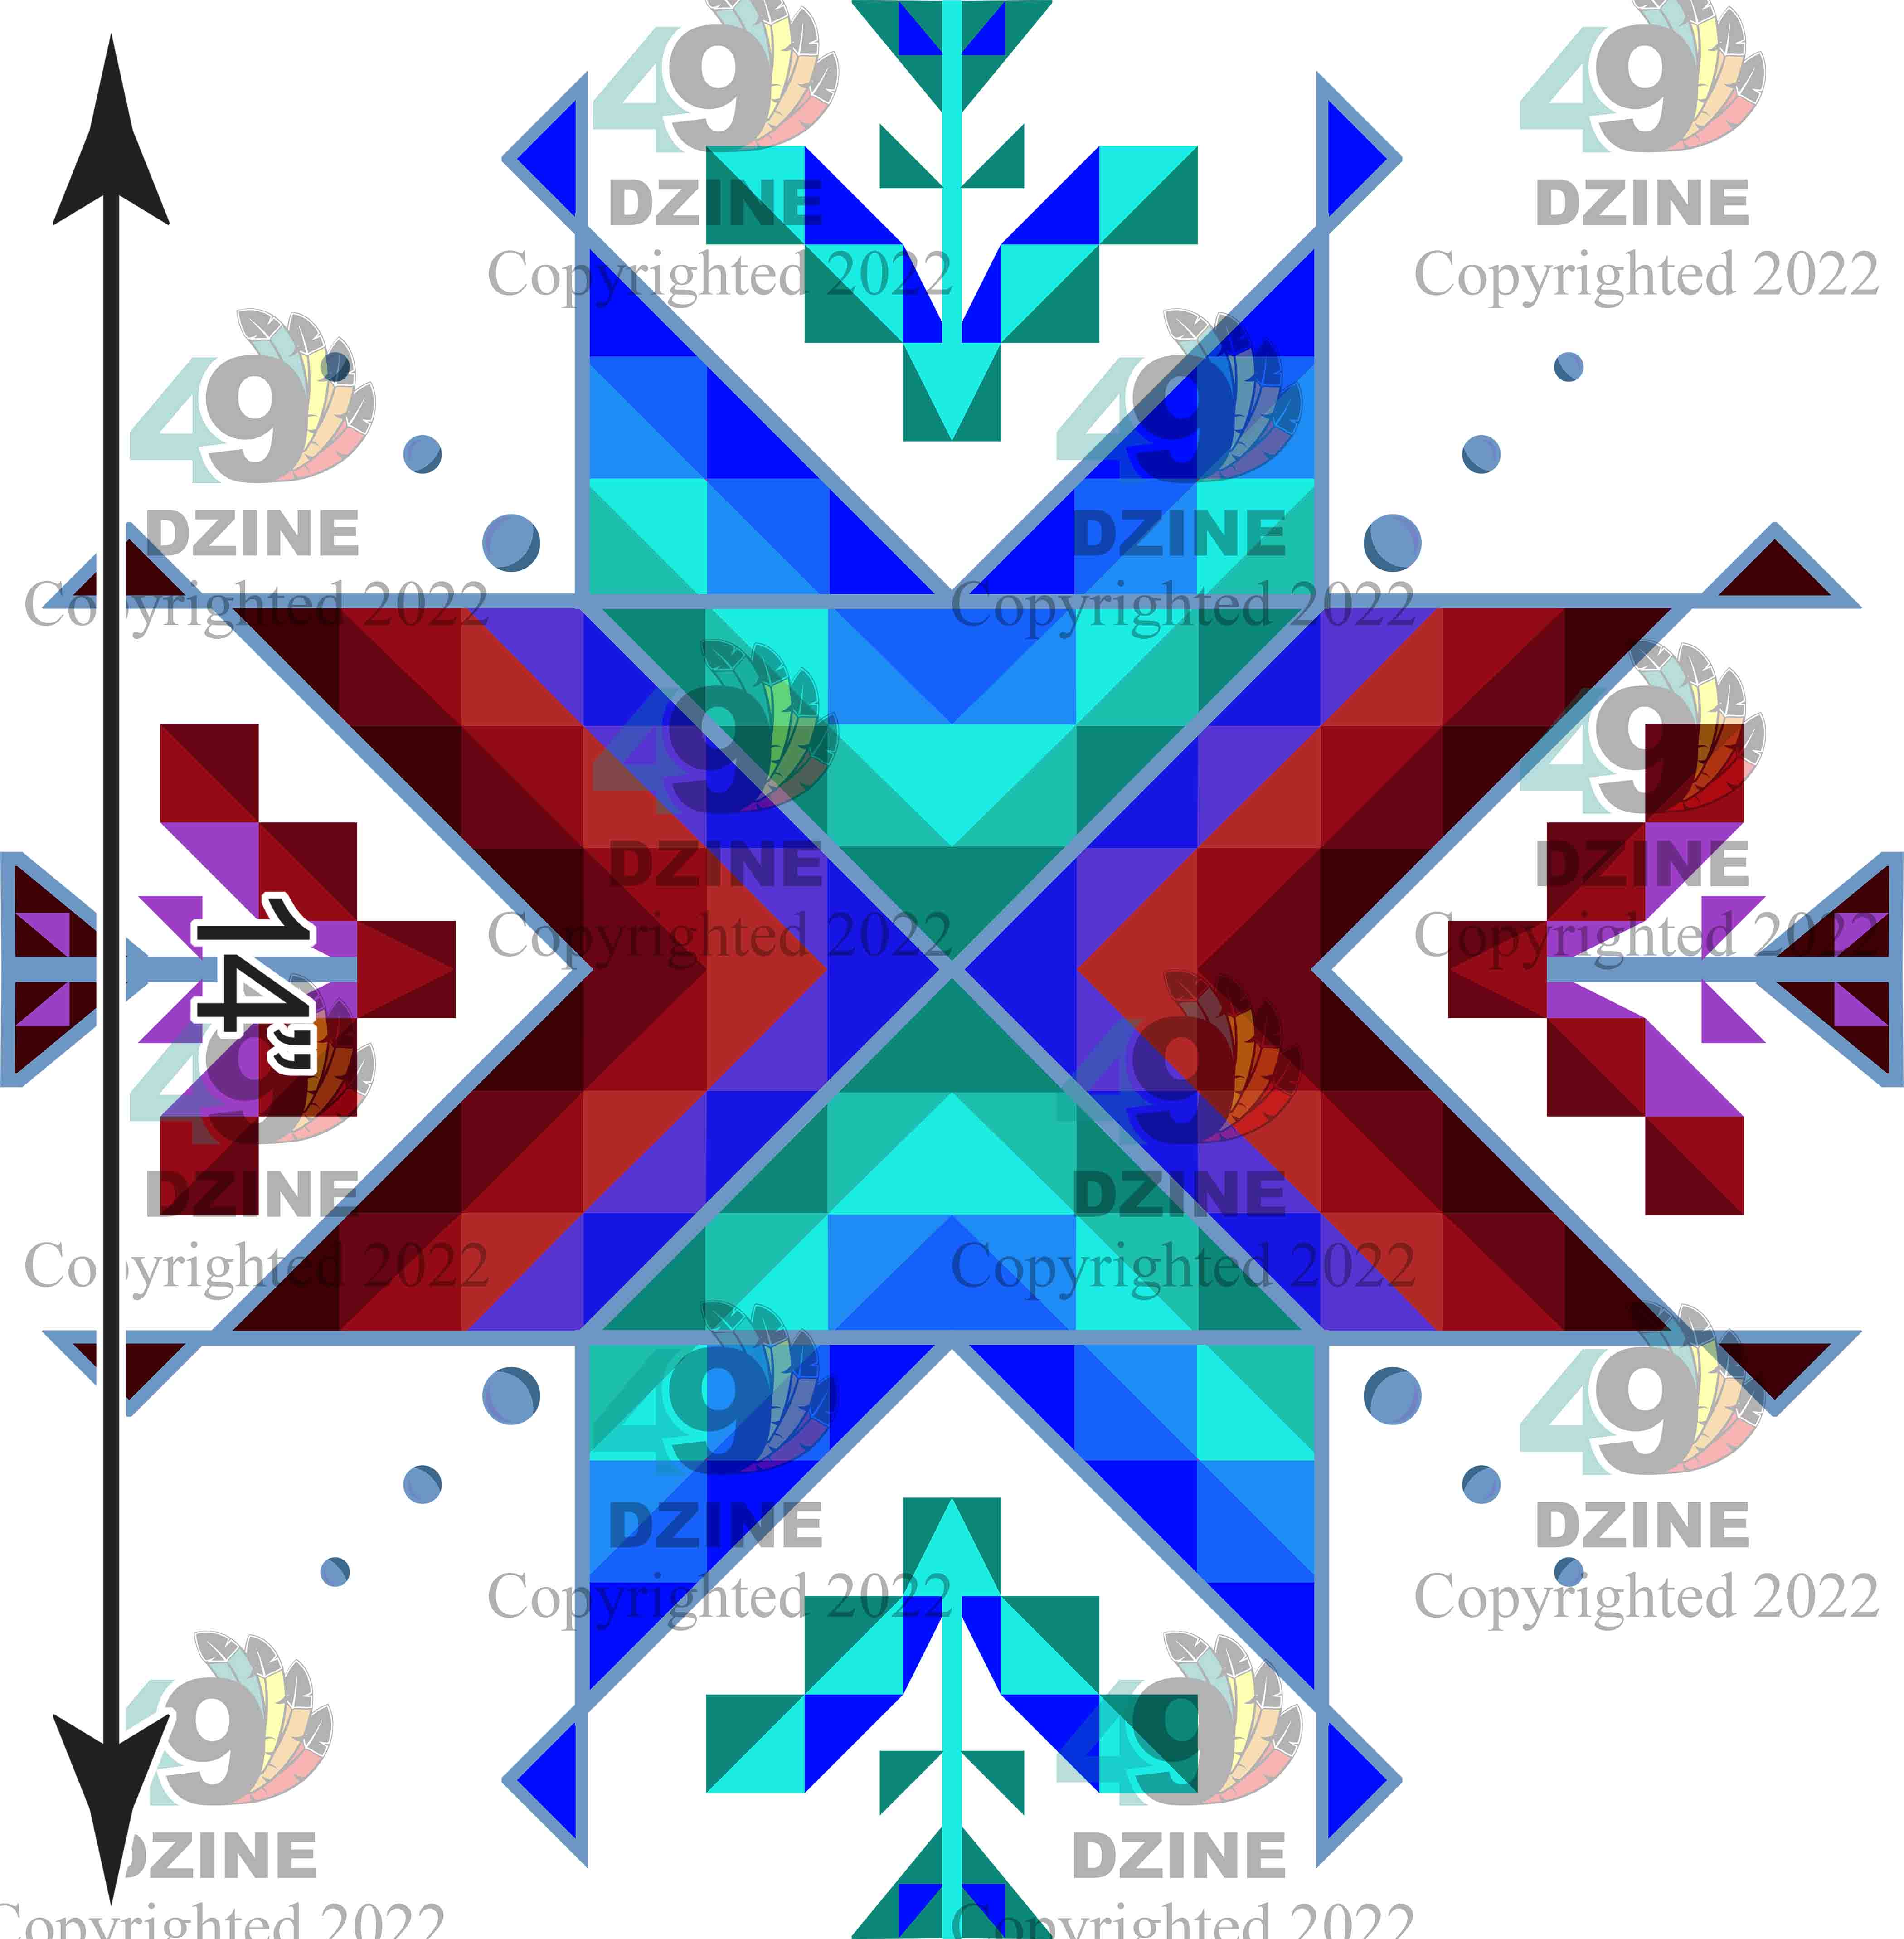 14-inch Geometric Transfer Dream of the Ancestors Transfers 49 Dzine 